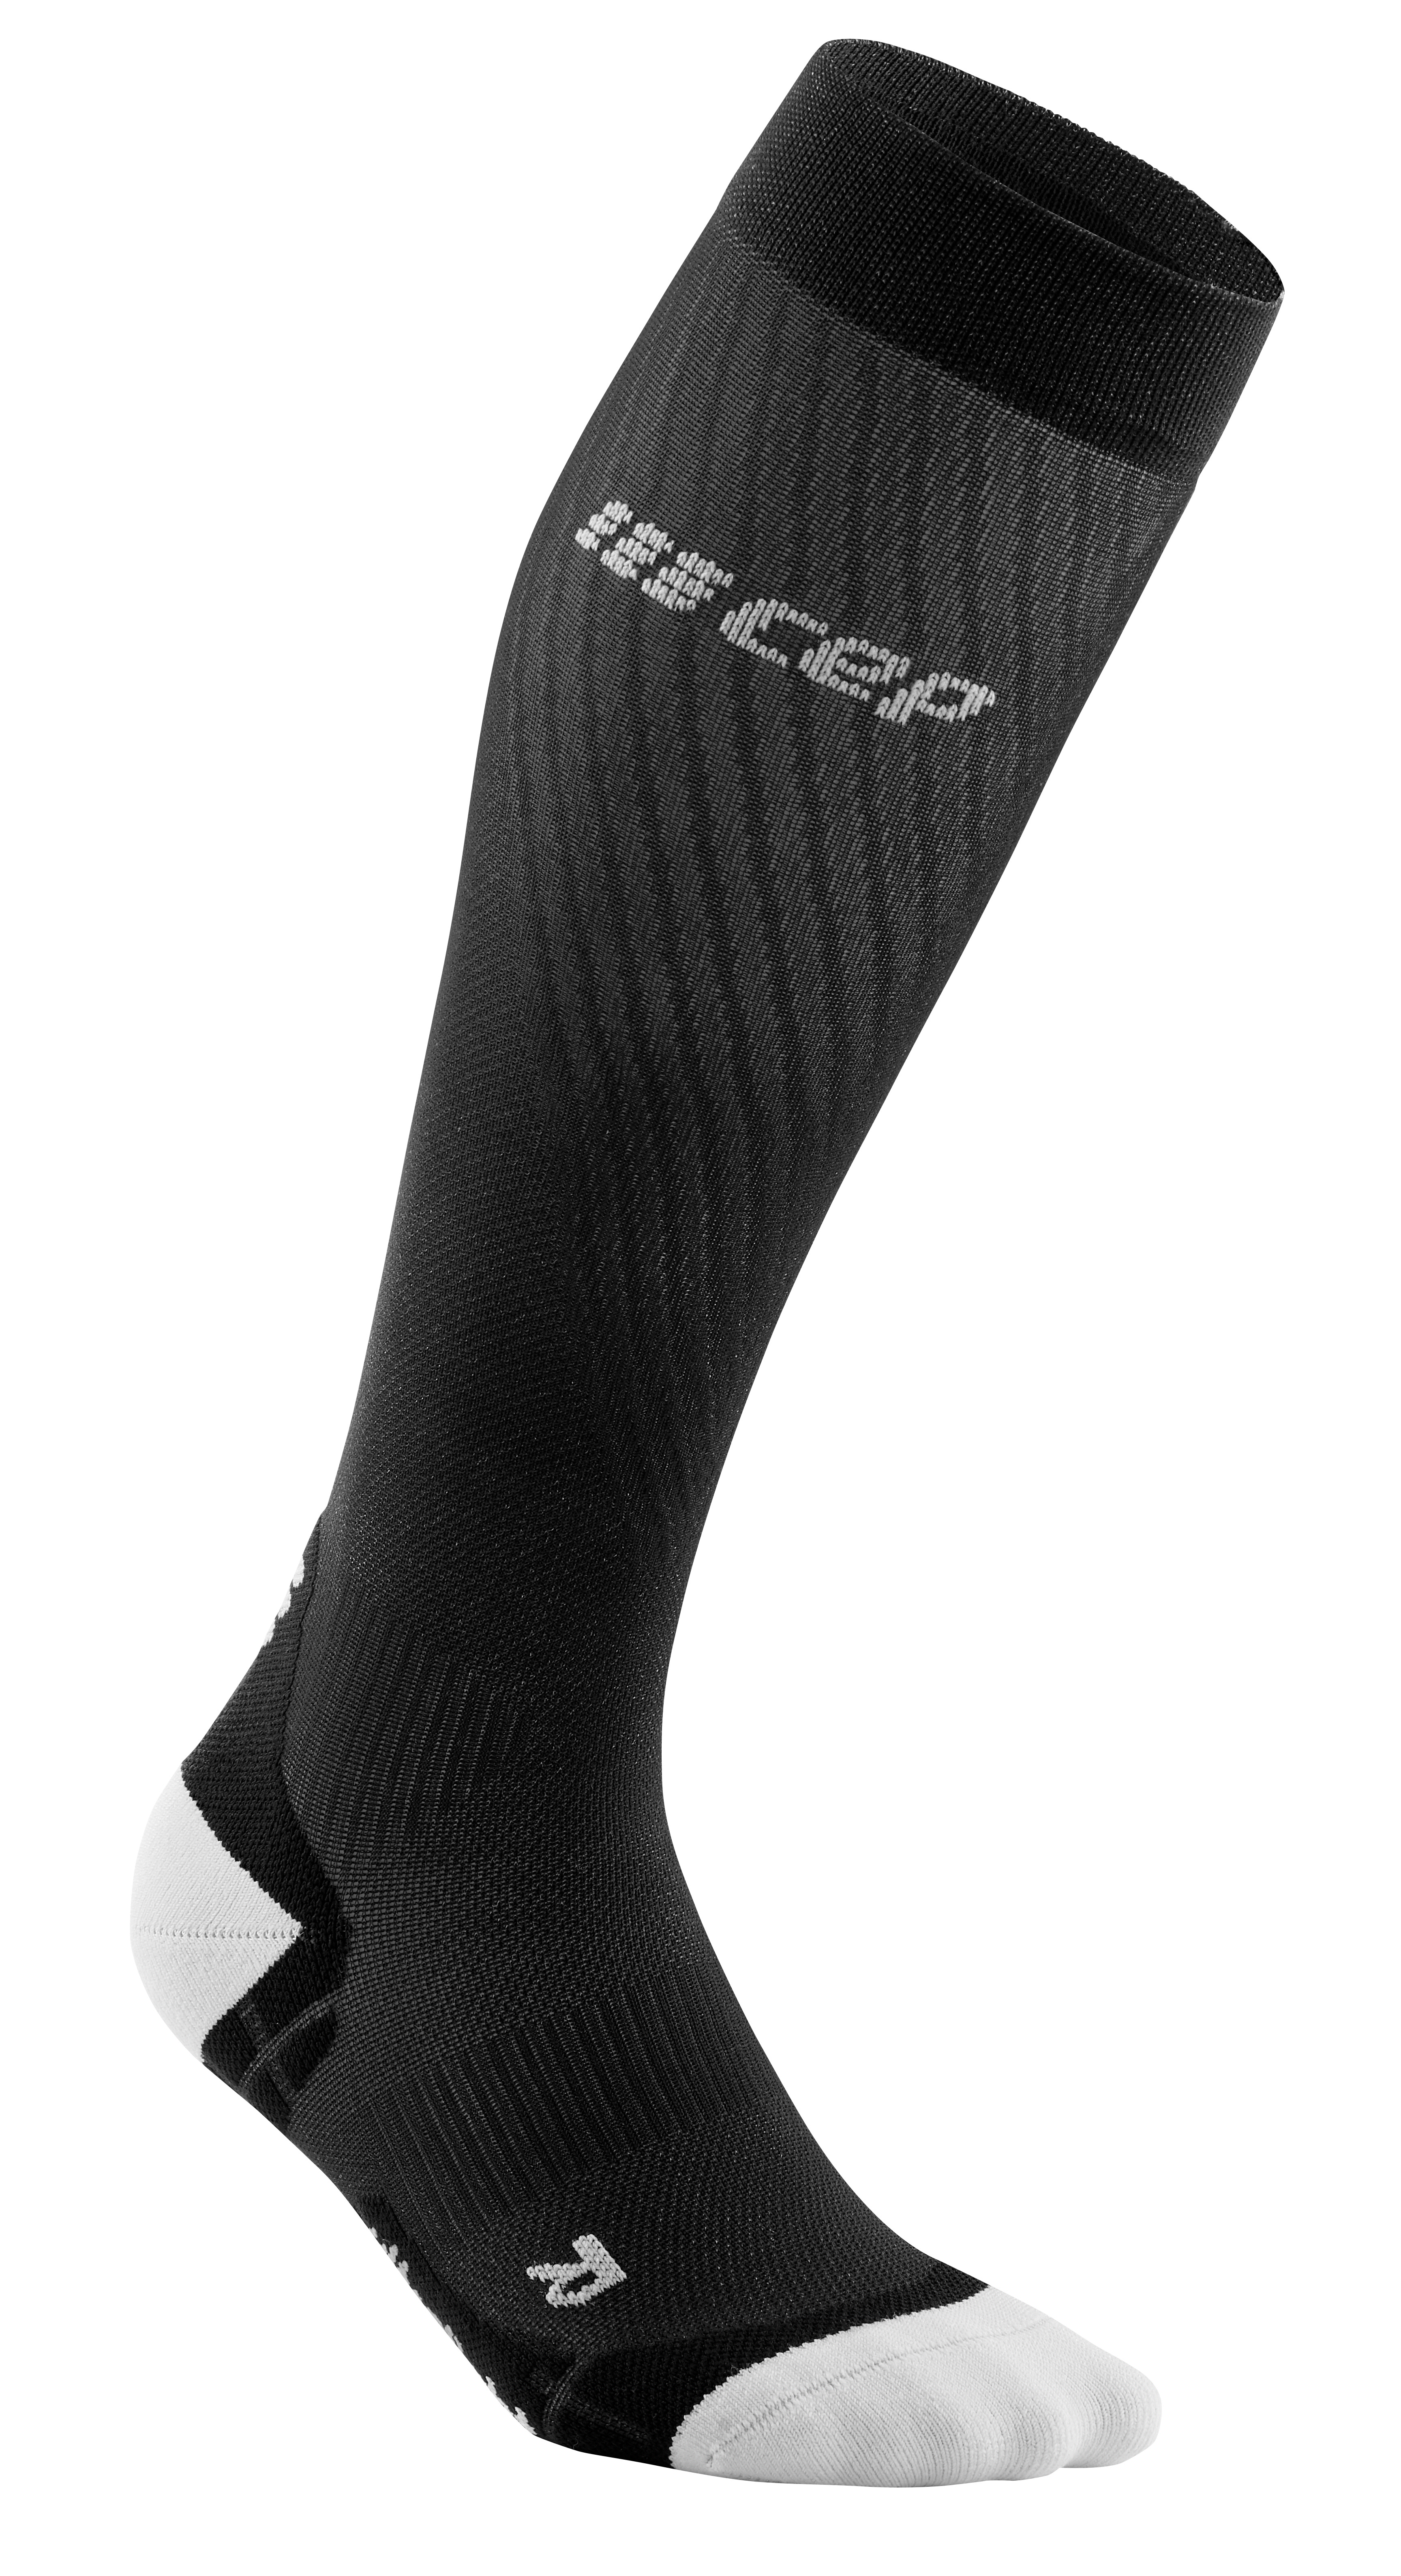 CEP run ultralight compression socks